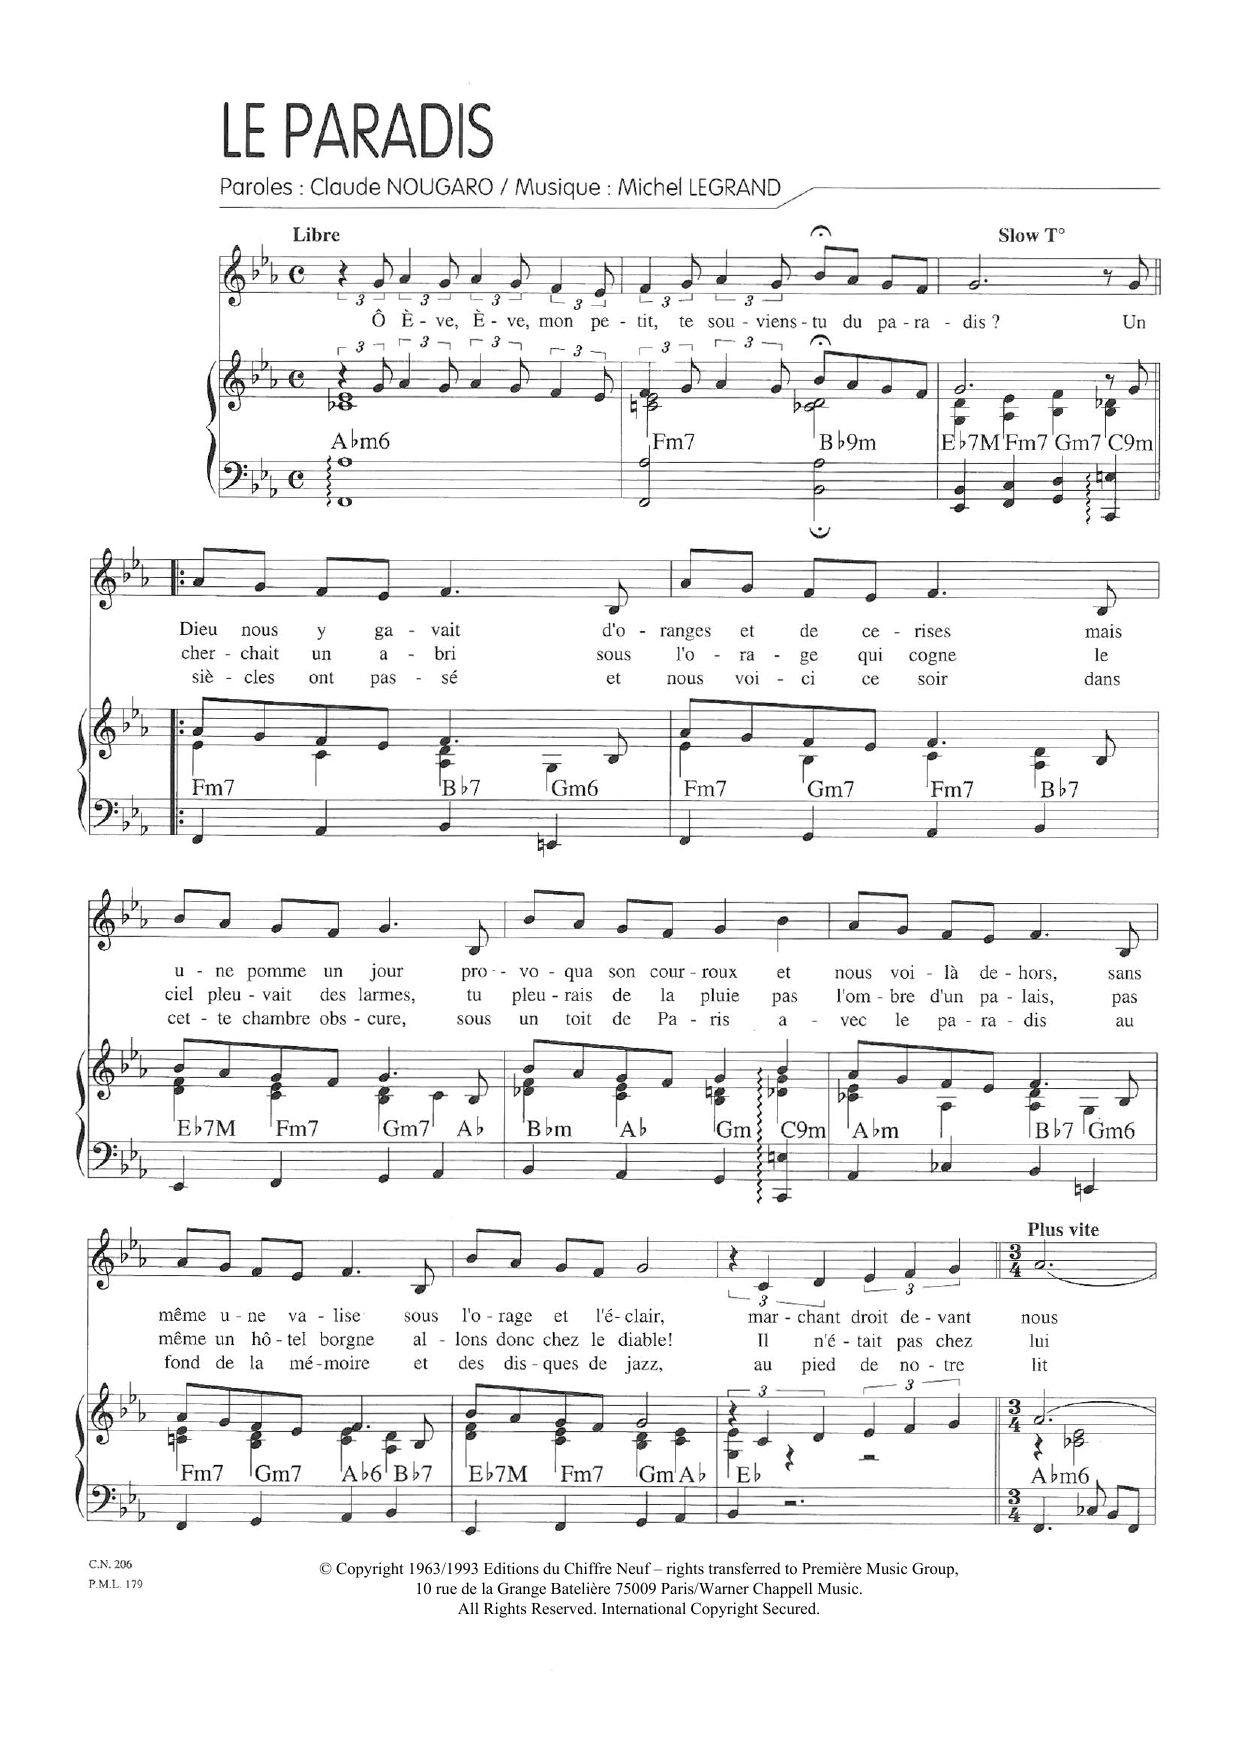 Claude Nougaro Le Paradis Sheet Music Notes & Chords for Piano & Vocal - Download or Print PDF